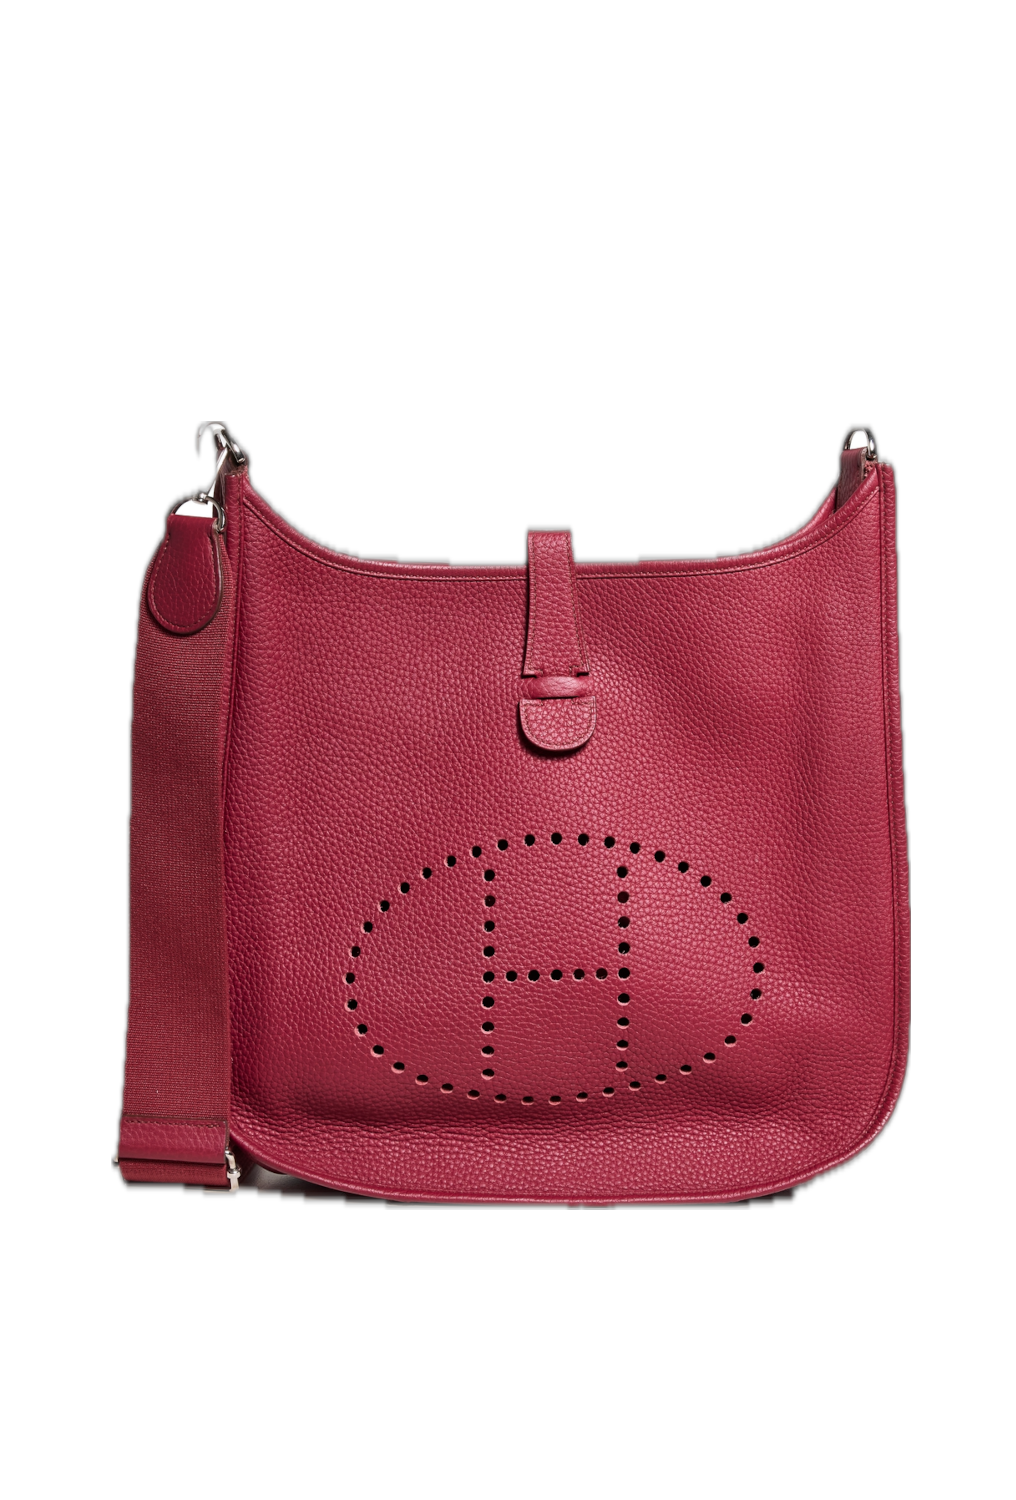 Luxury Handbag Trend